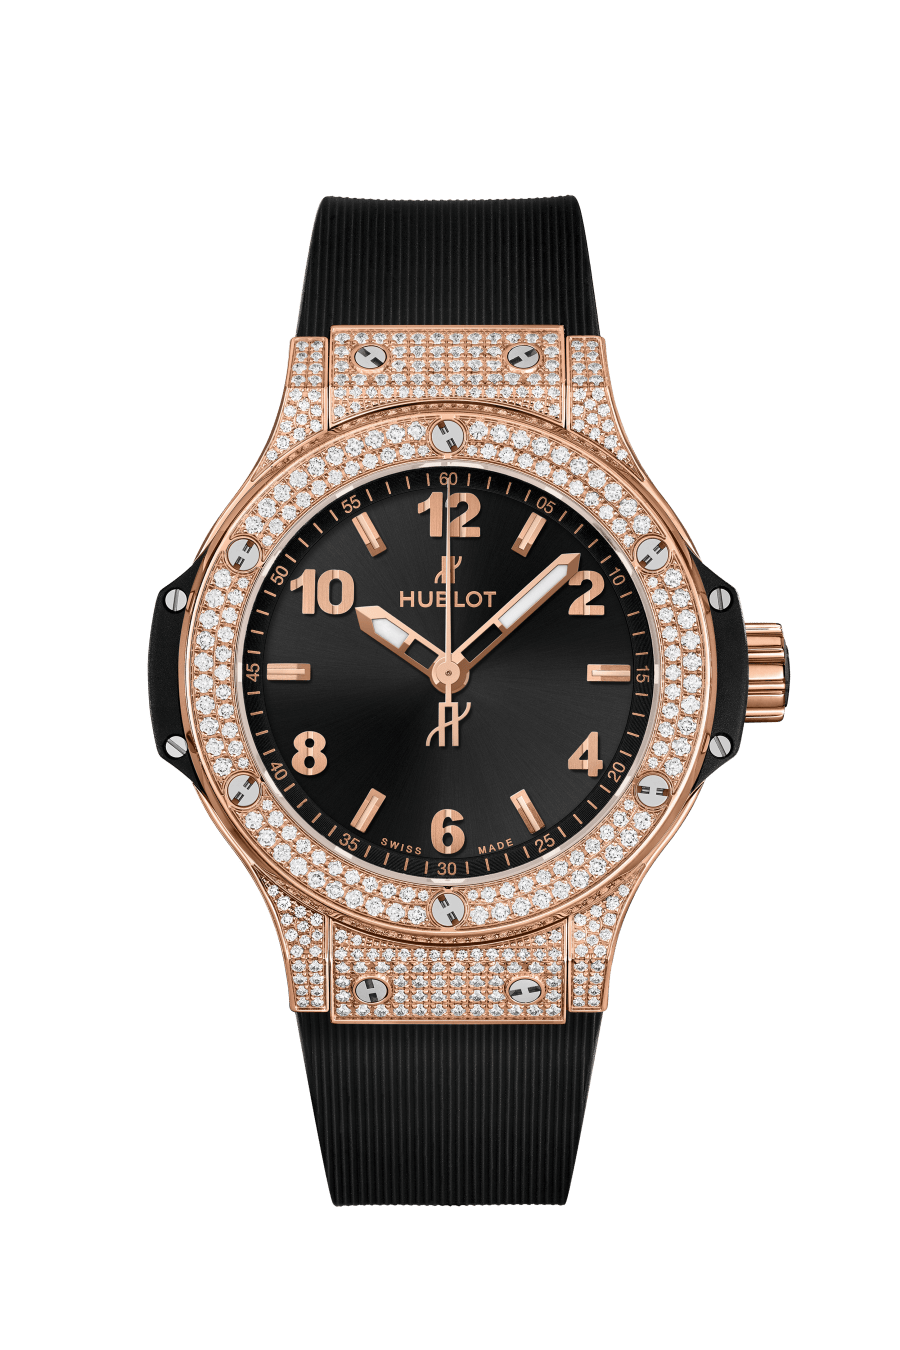 Men's watch / unisex  HUBLOT, Big Bang Gold Pave / 38mm, SKU: 361.PX.1280.RX.1704 | watchapproach.com